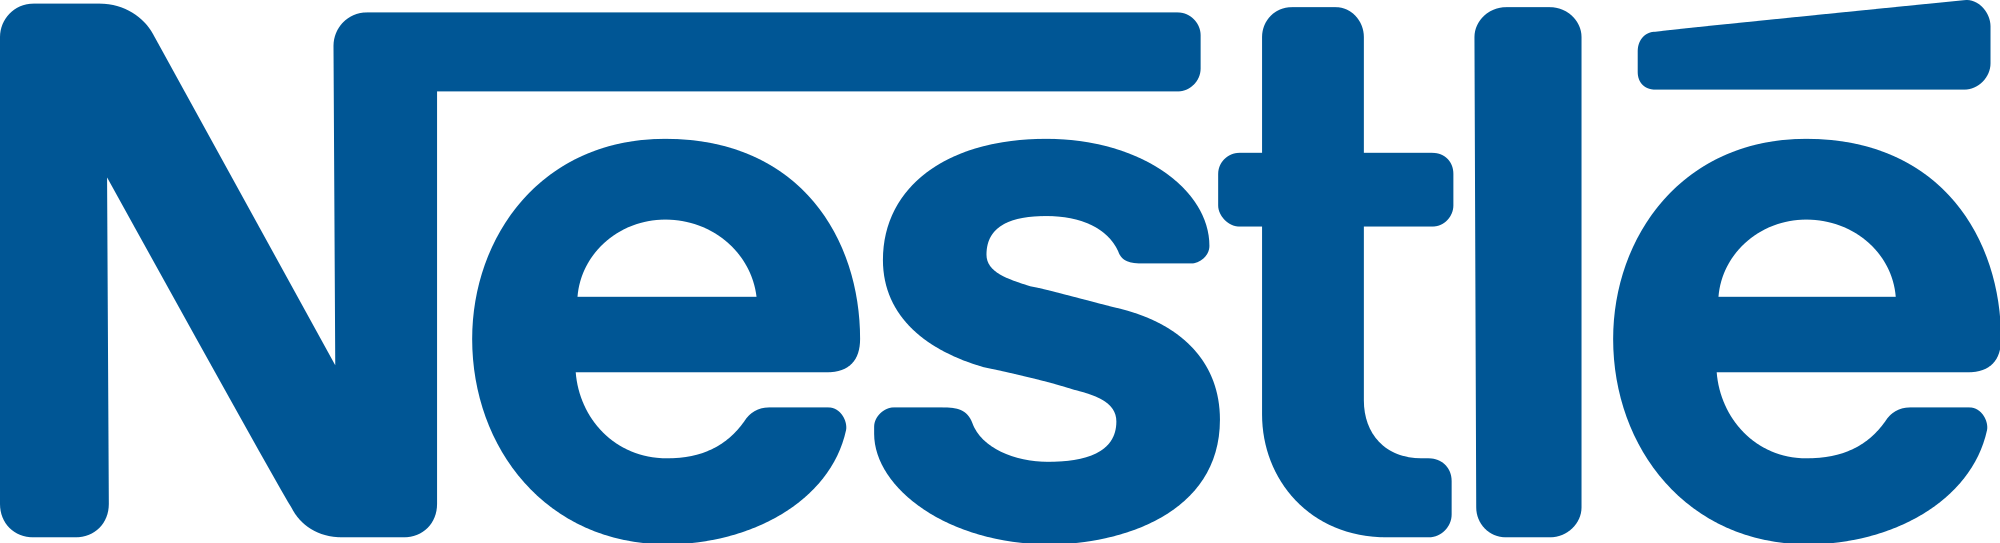 Nestle logo png3